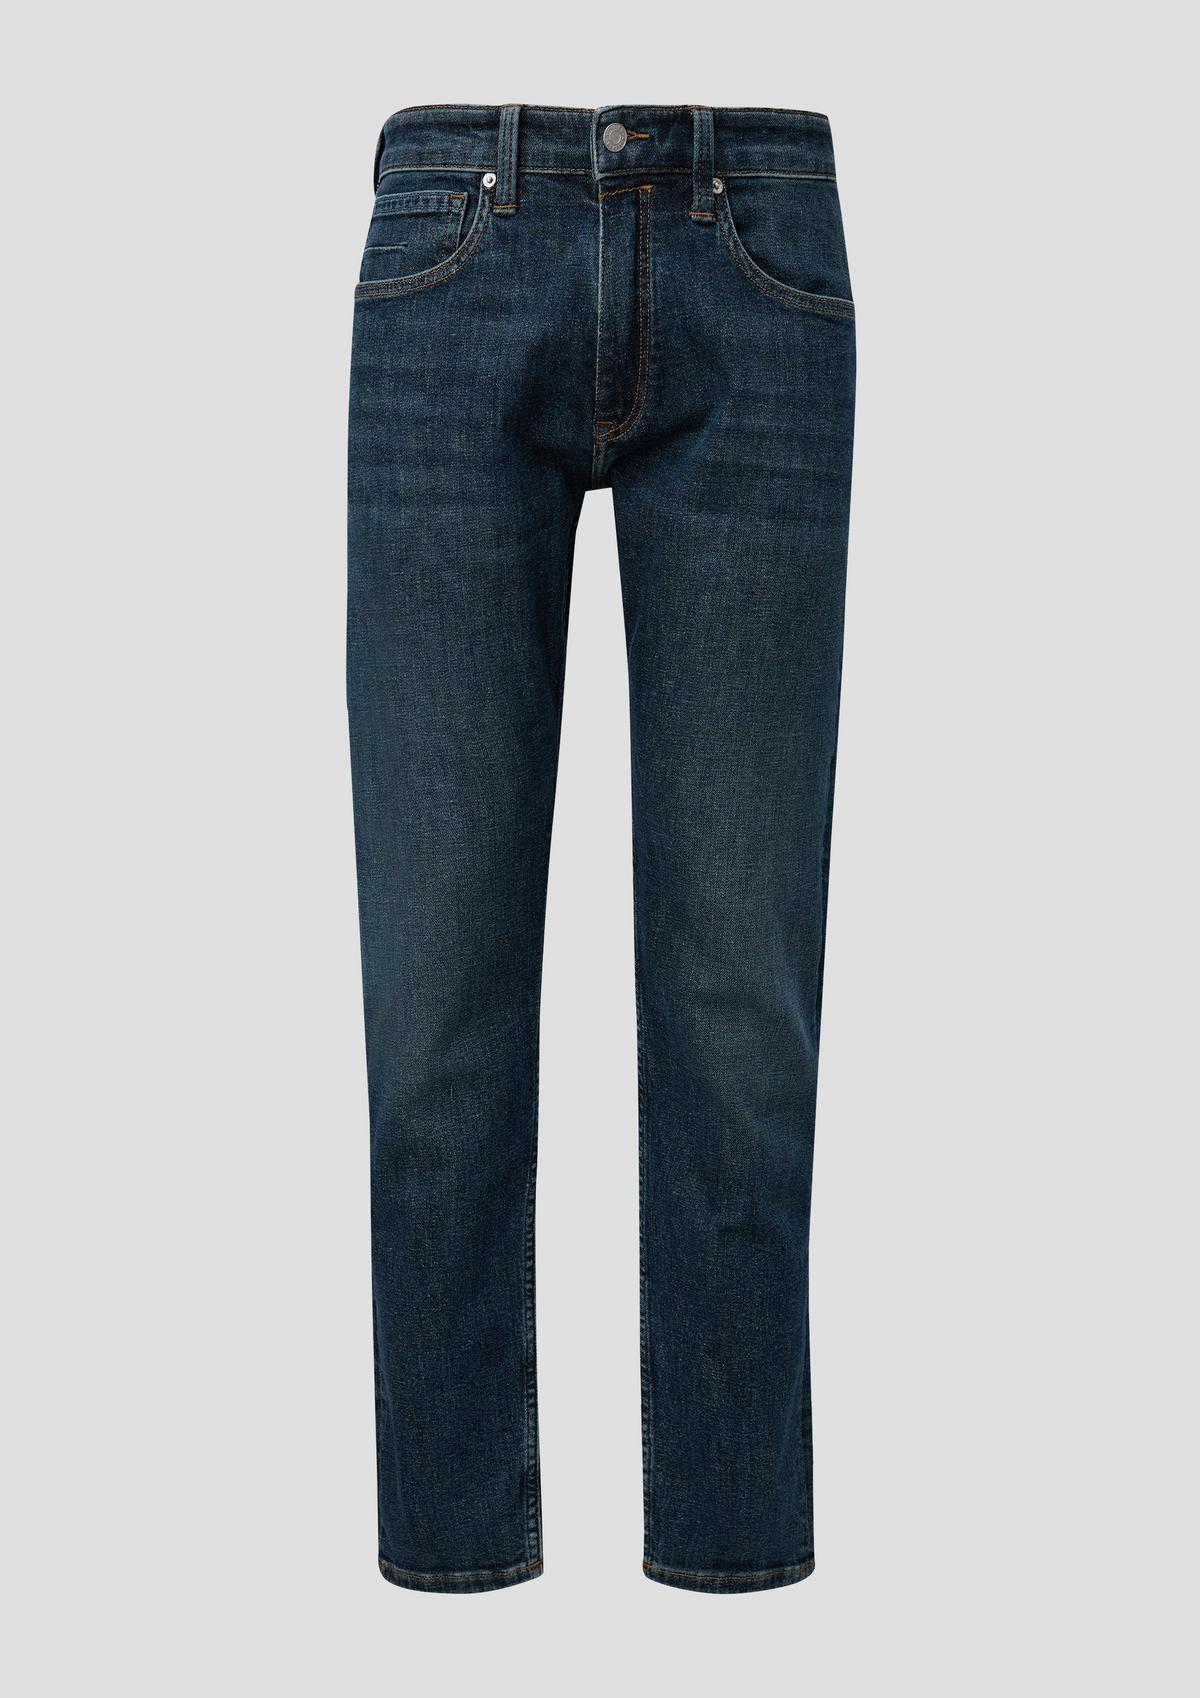 s.Oliver Jeans / Regular Fit / High Rise / Tapered Leg